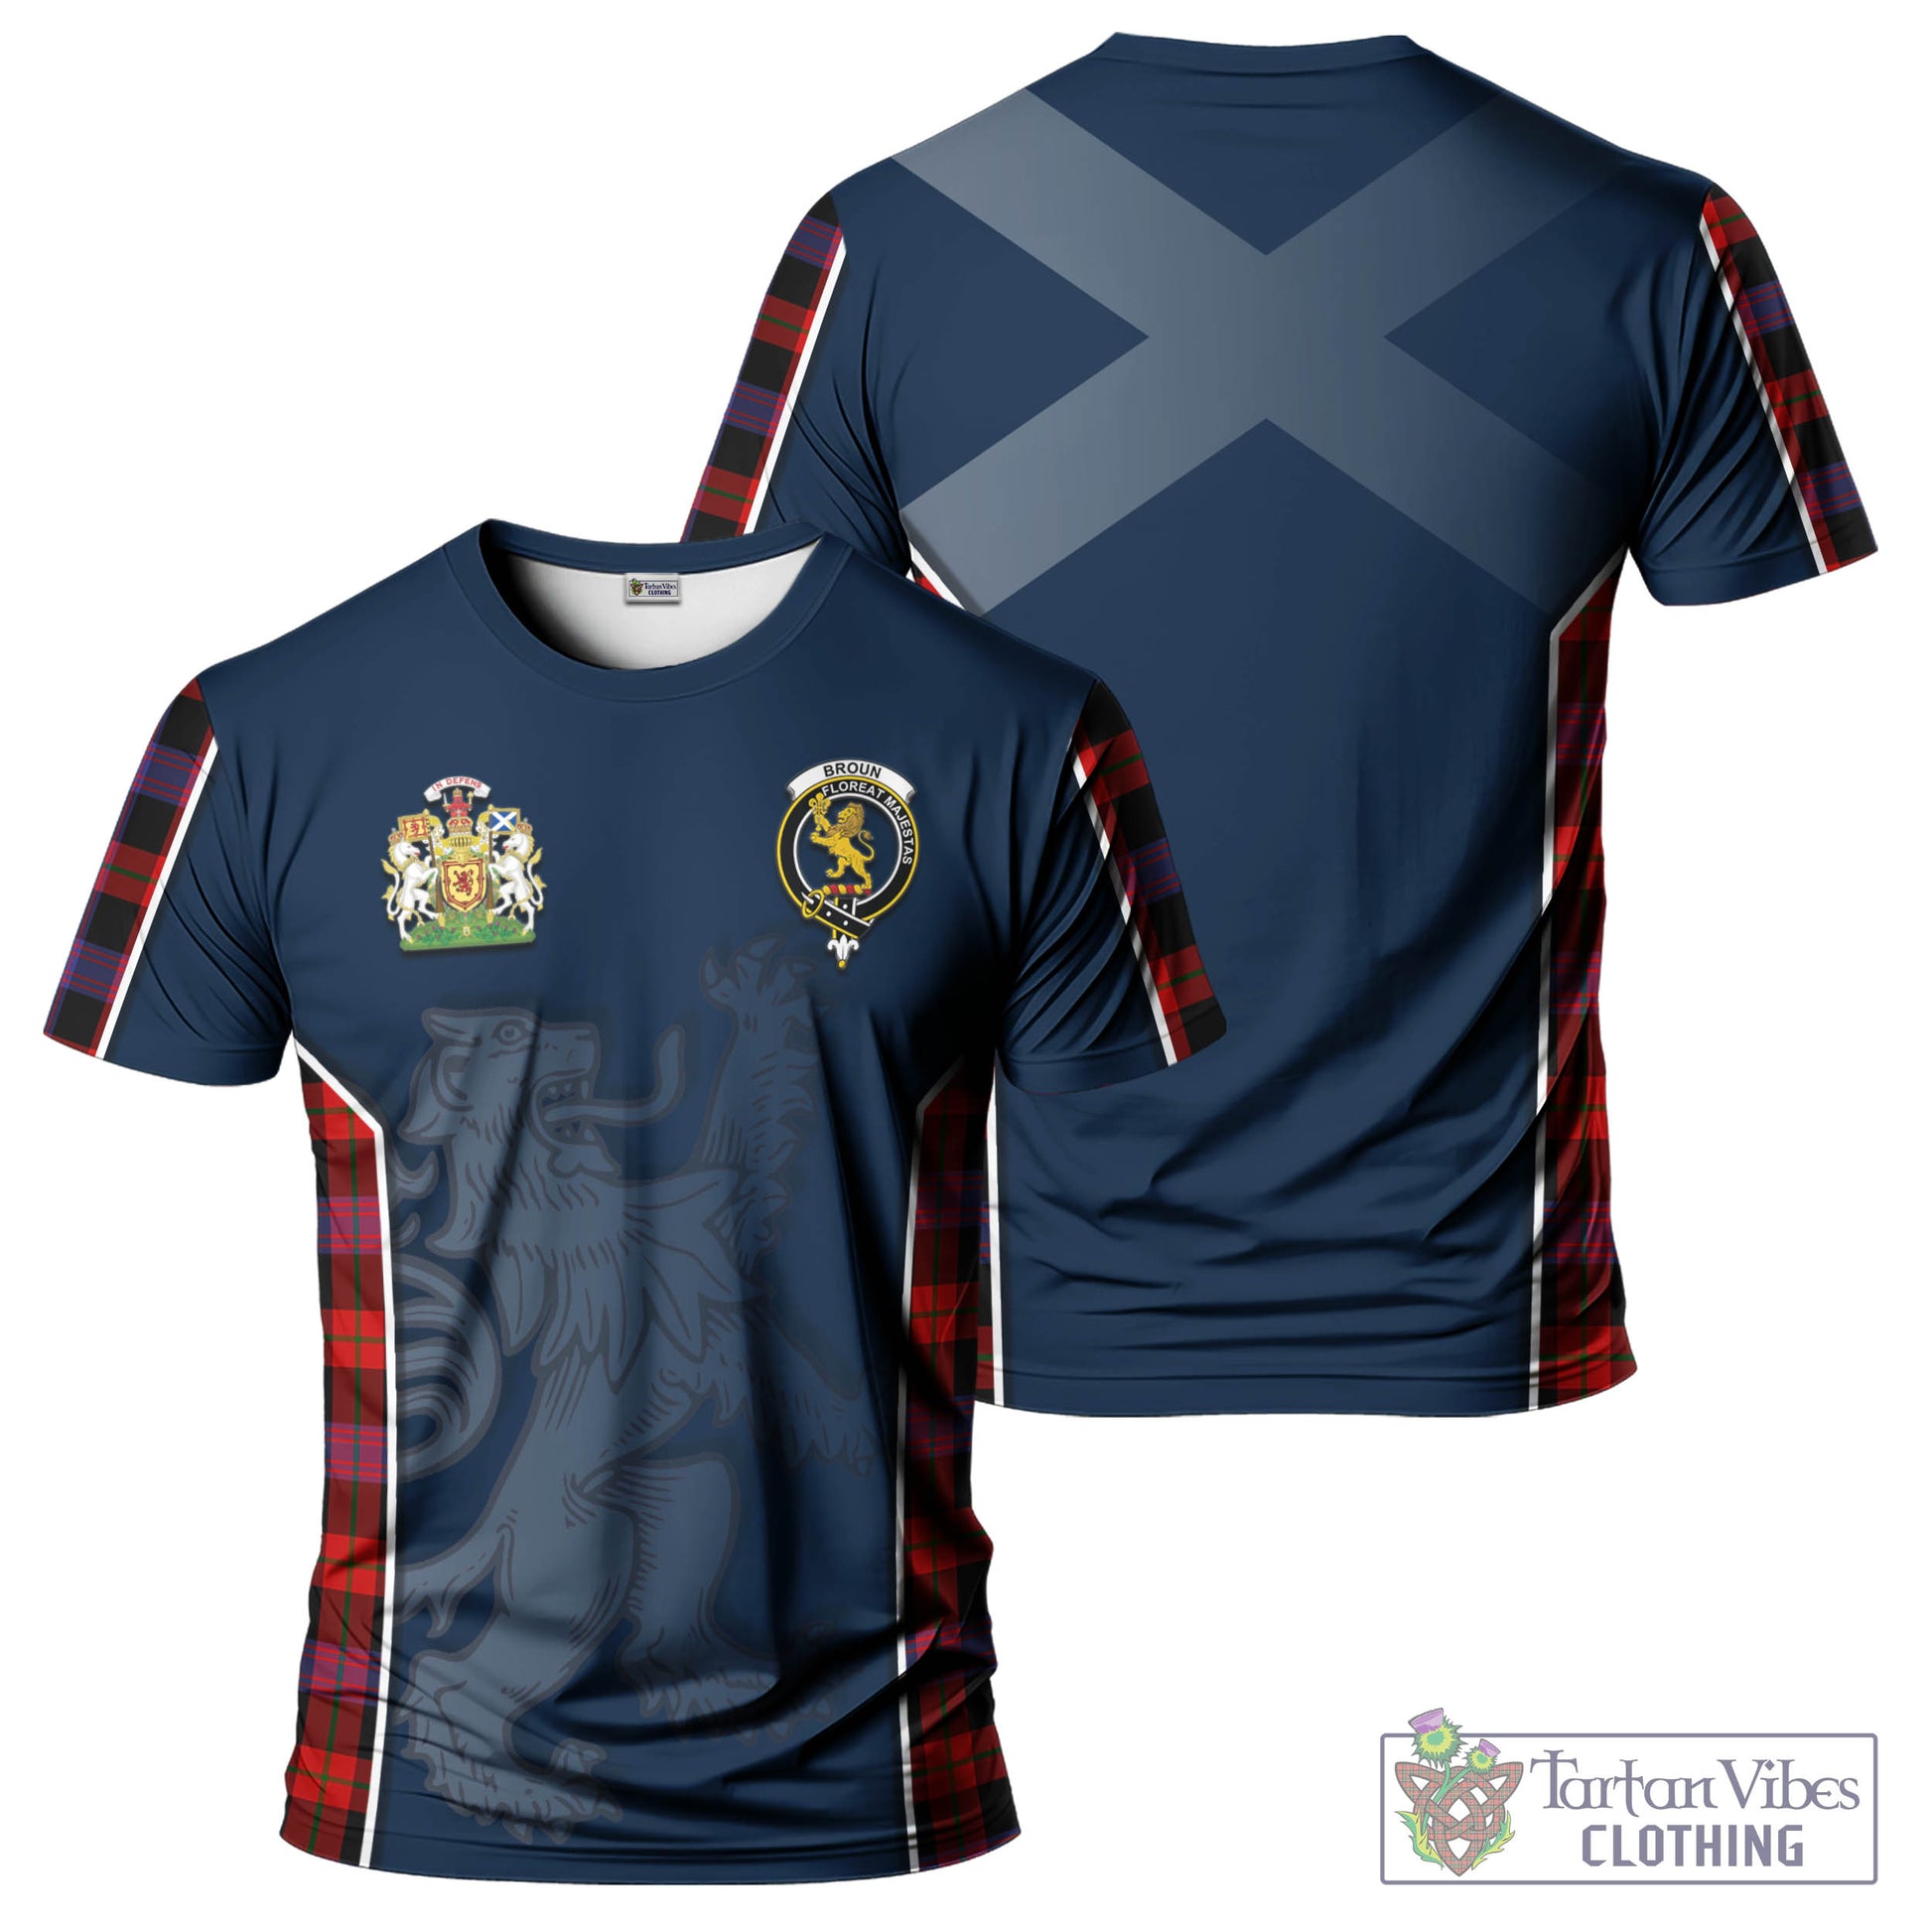 Tartan Vibes Clothing Broun Modern Tartan T-Shirt with Family Crest and Lion Rampant Vibes Sport Style